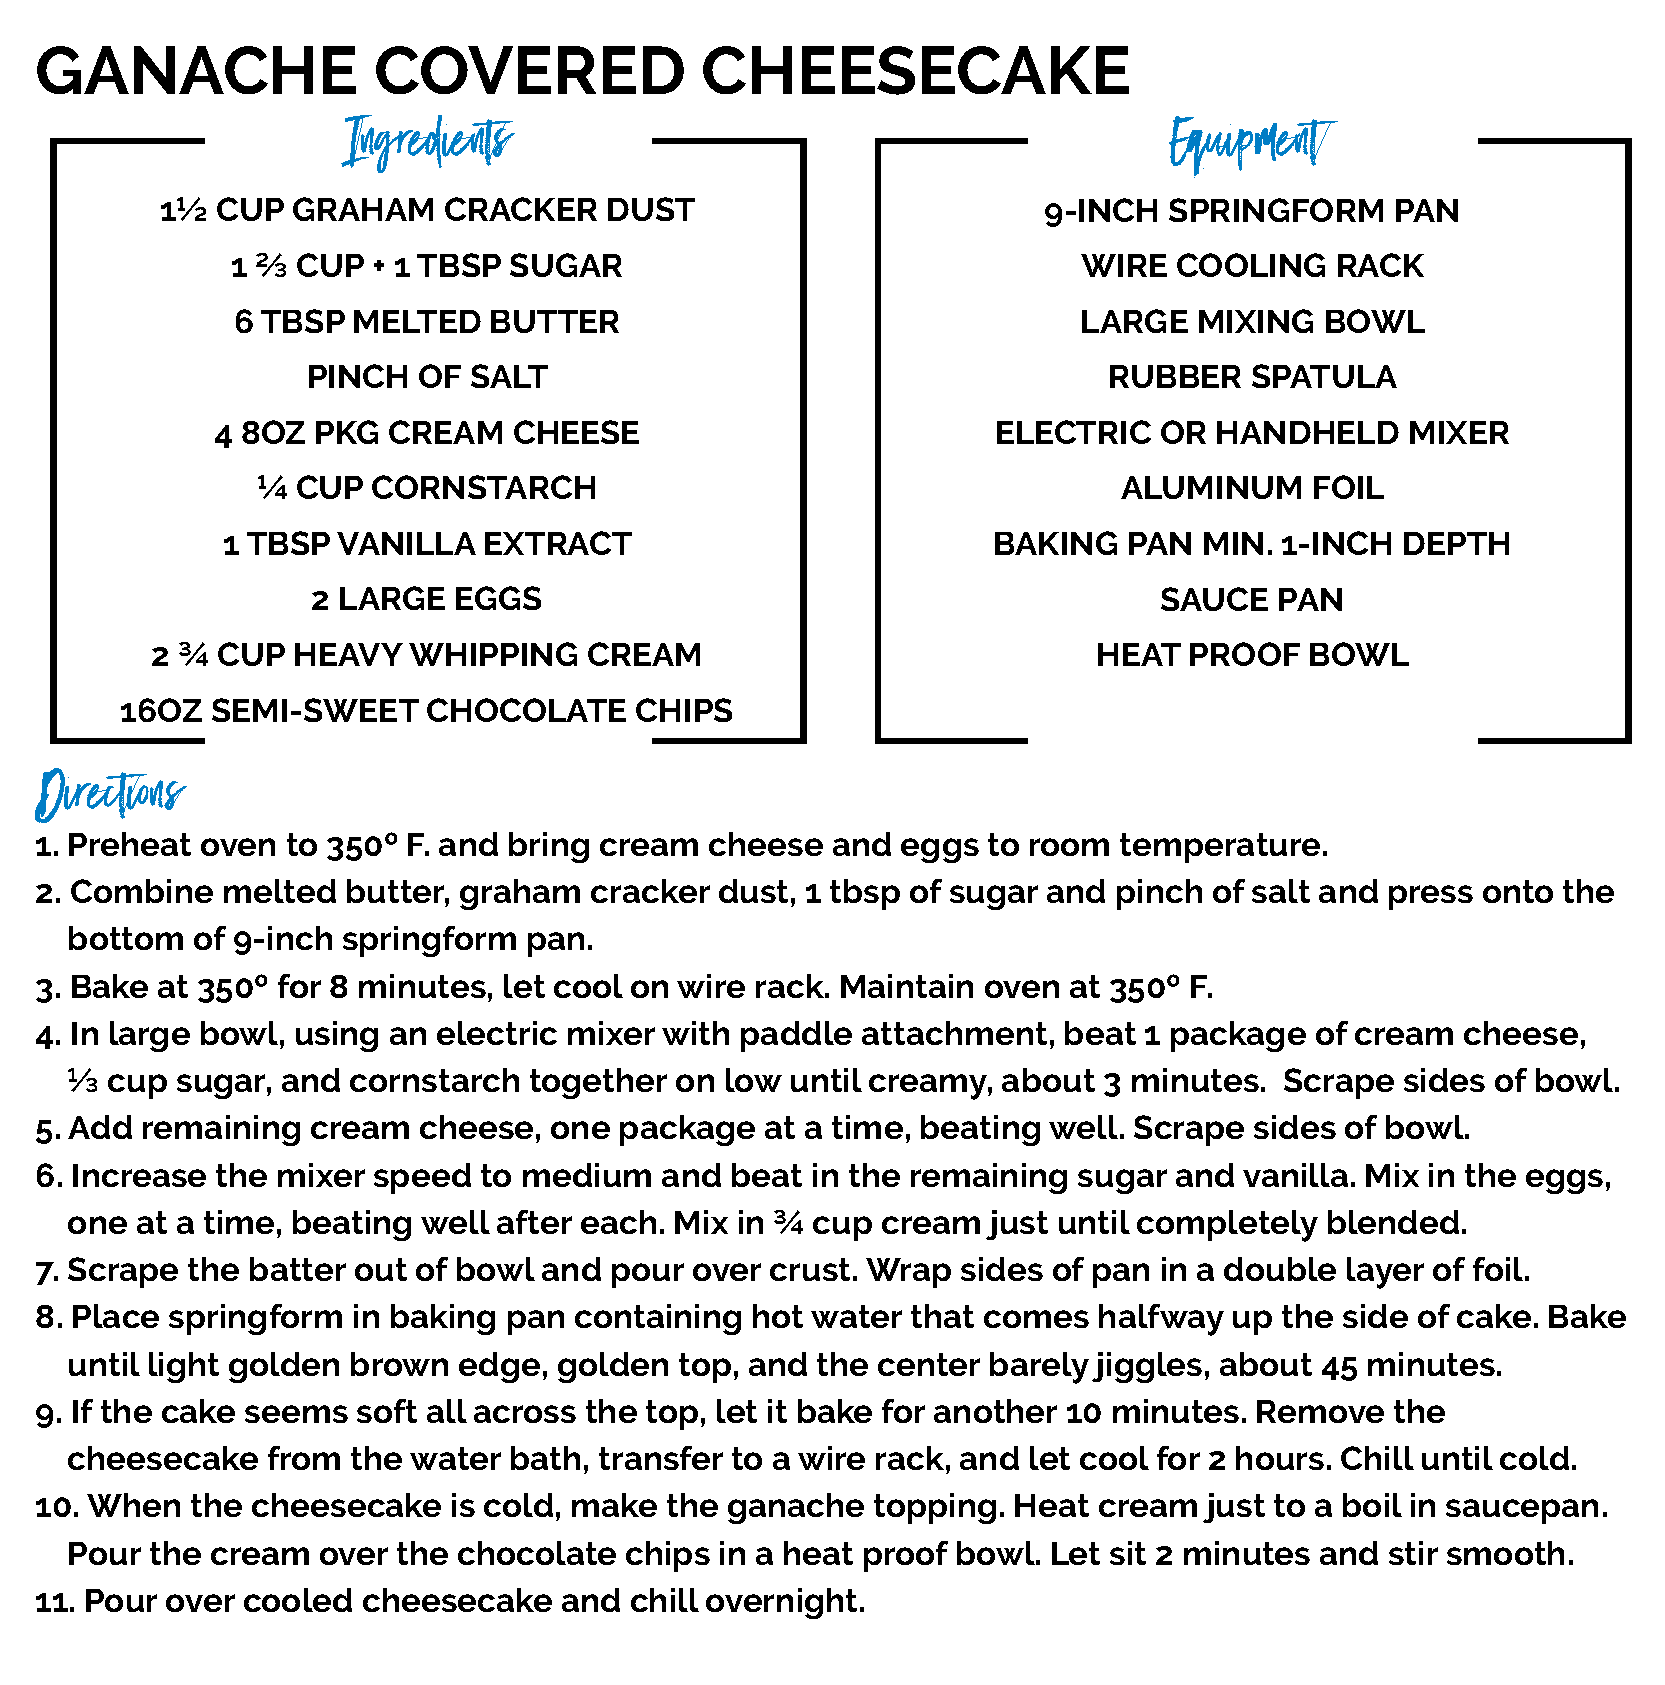 Ganache Cheesecake Recipe Card_8.5x11.png